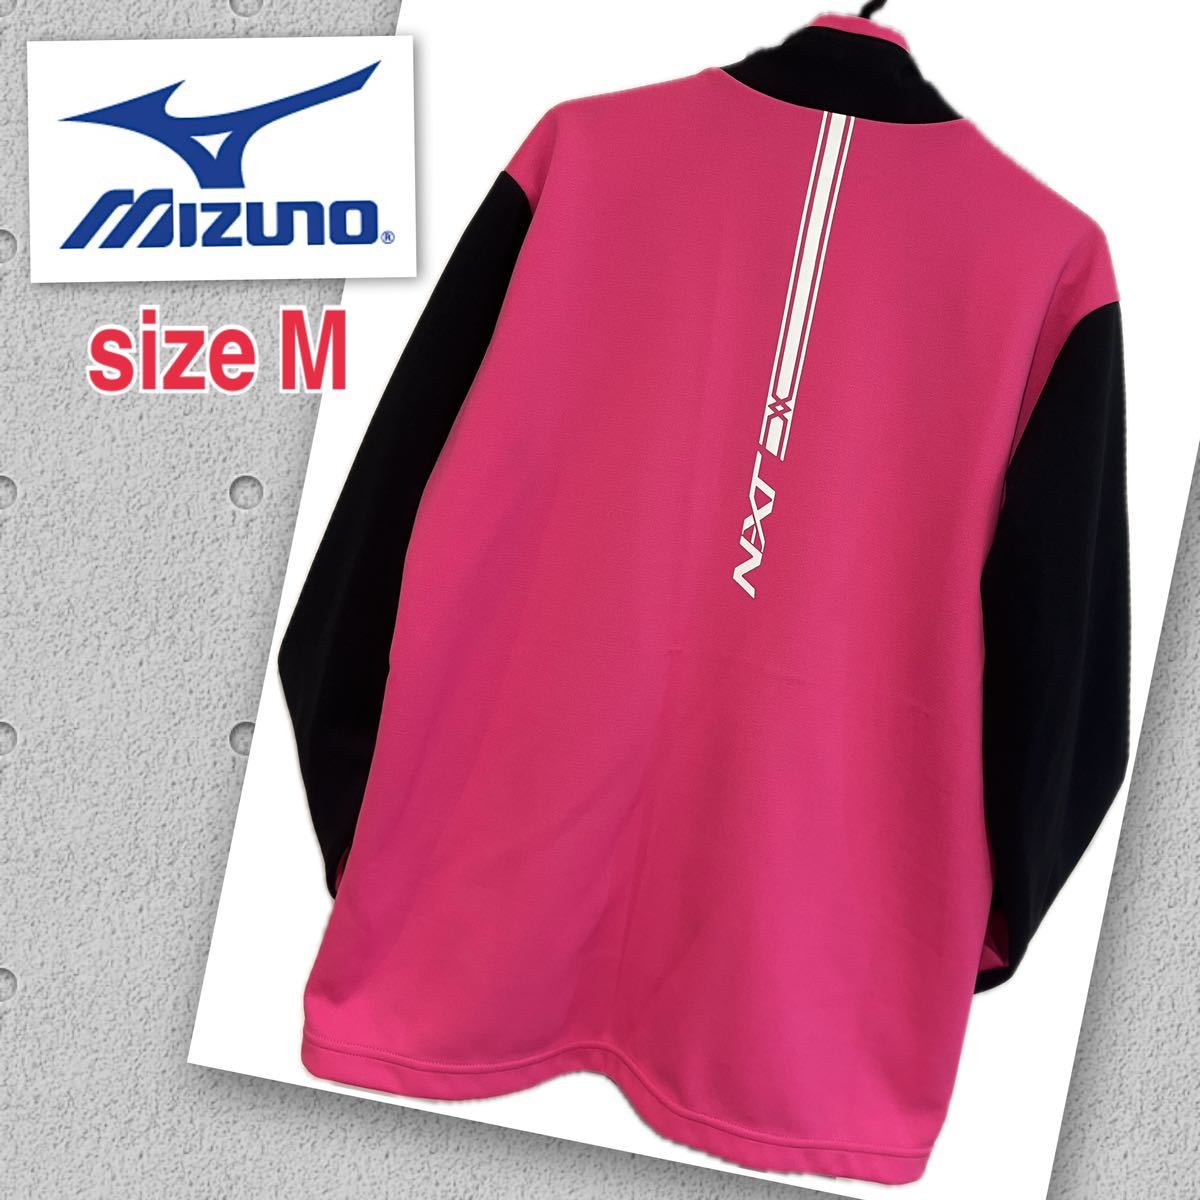 MIZUNO Mizuno jersey jacket shorts 2 point top and bottom set M size black pink training wear setup beautiful goods 